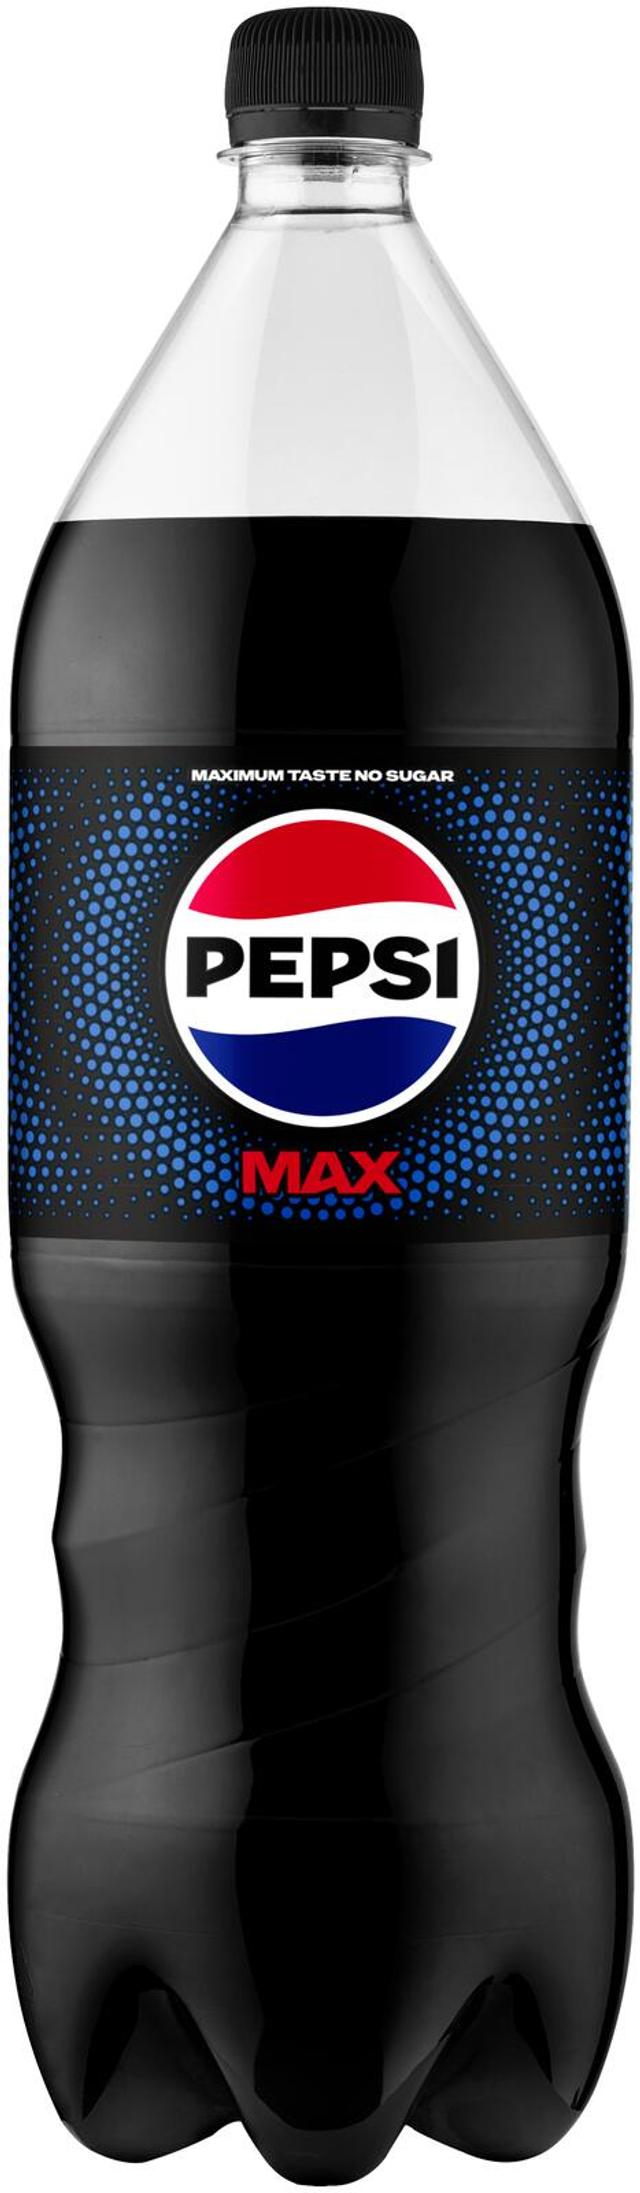 Pepsi Max virvoitusjuoma 1,5 l